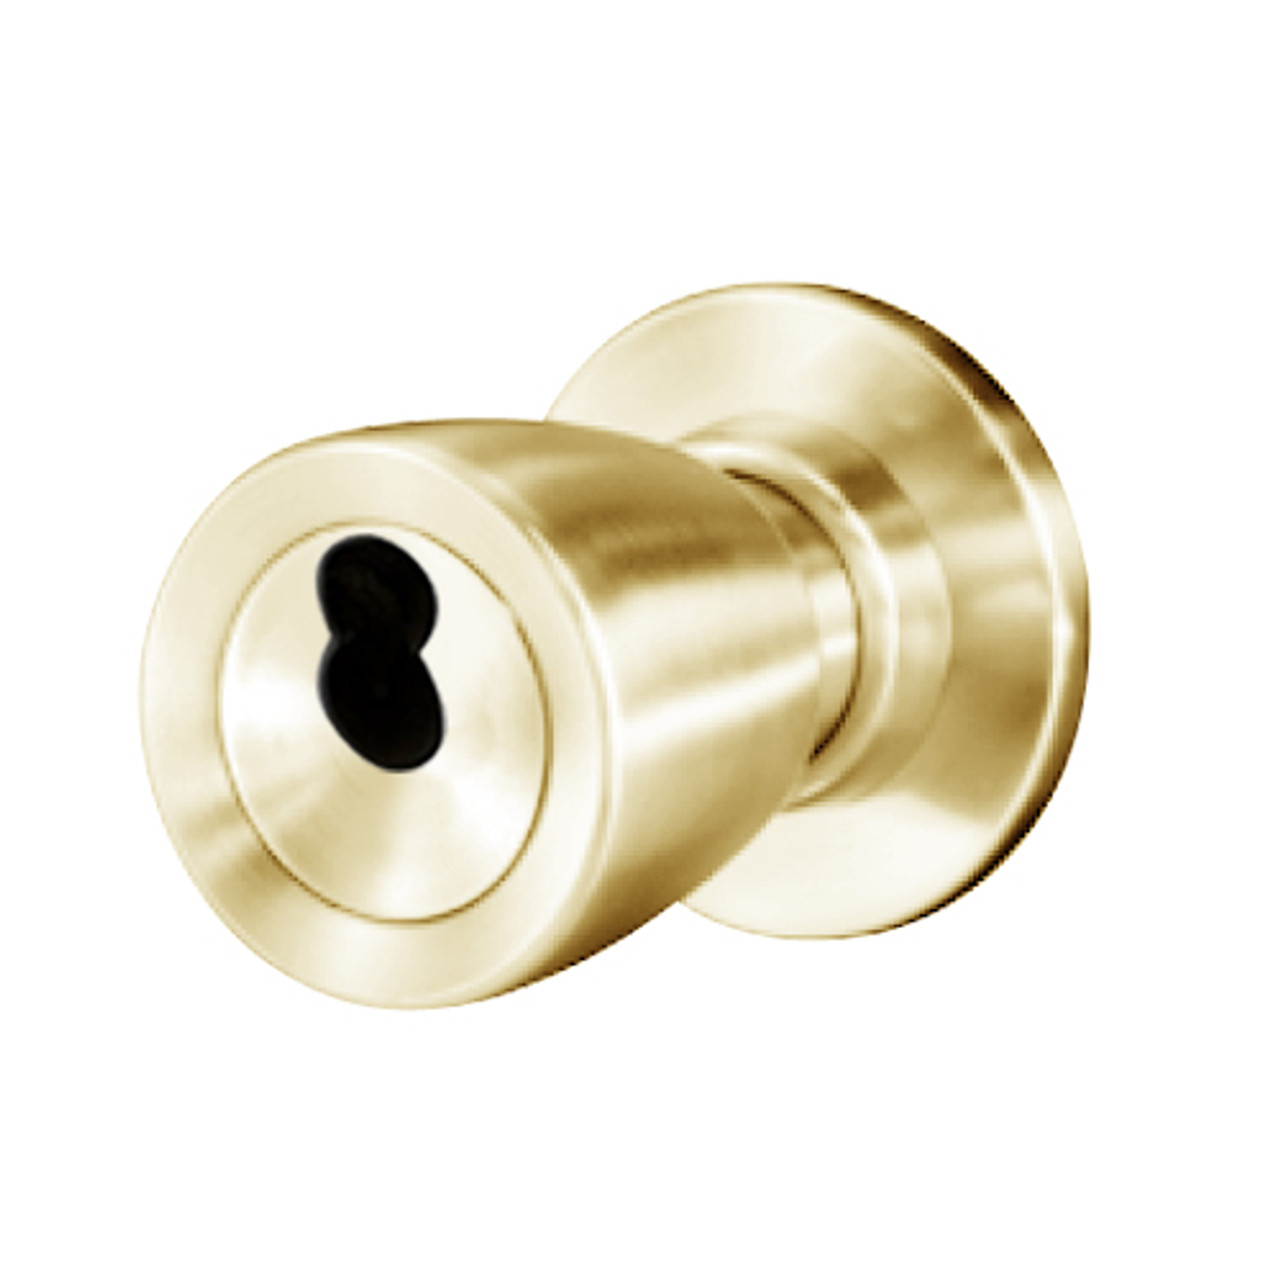 8K37C6CS3606 Best 8K Series Apartment Heavy Duty Cylindrical Knob Locks with Tulip Style in Satin Brass